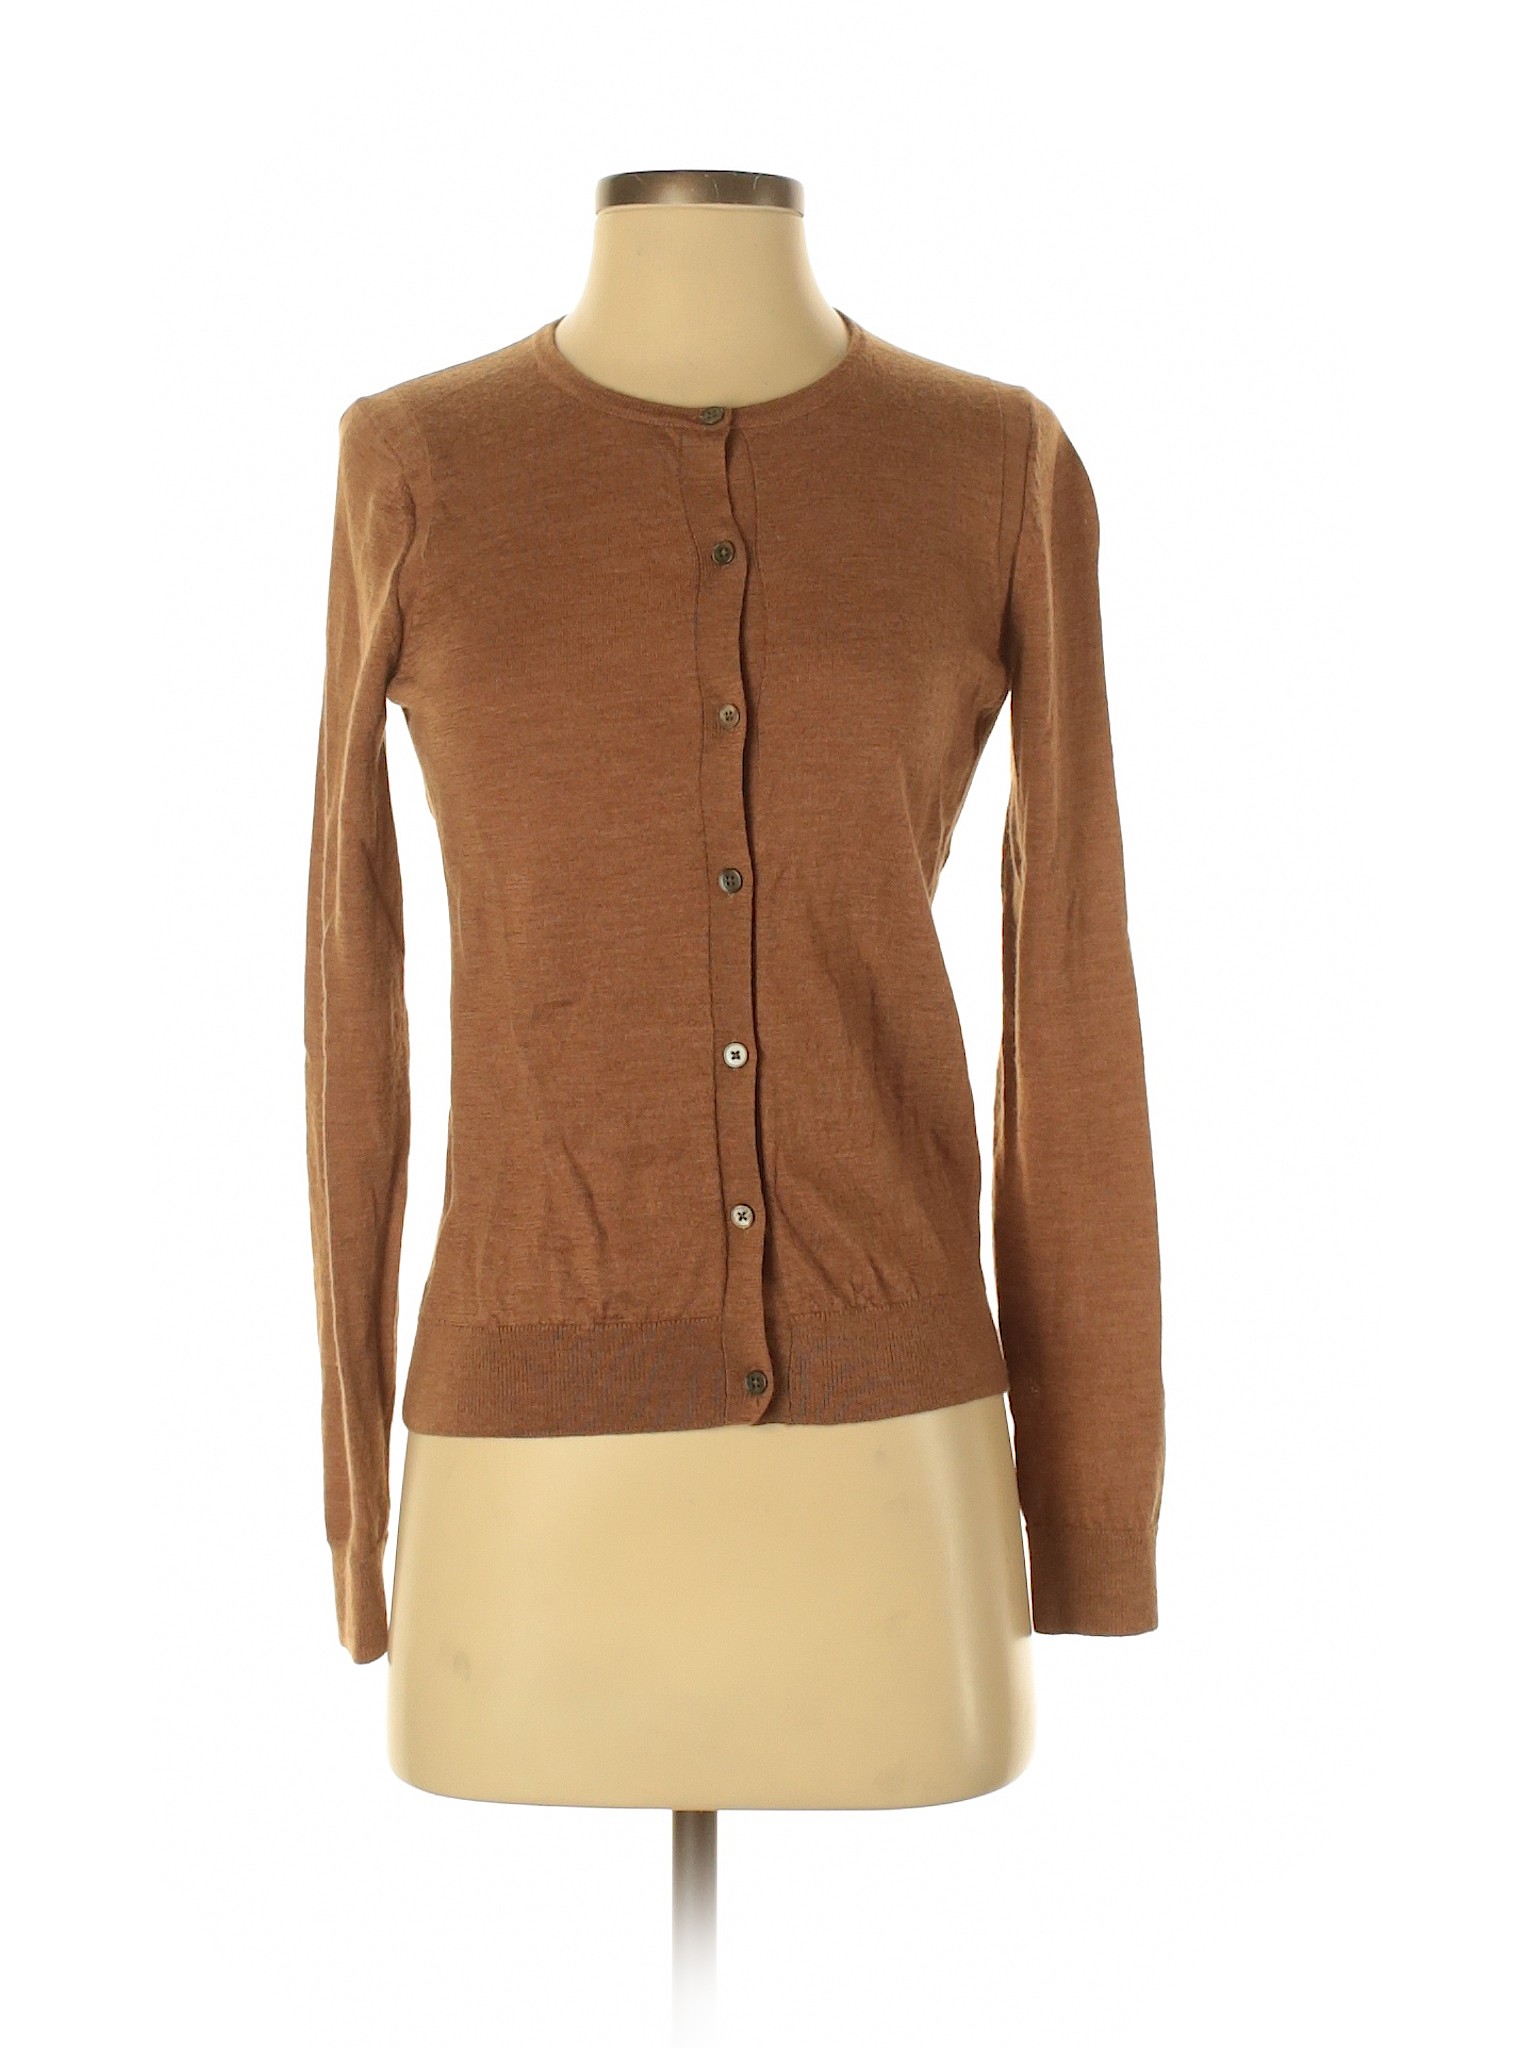 Gap Women Brown Wool Cardigan S | eBay